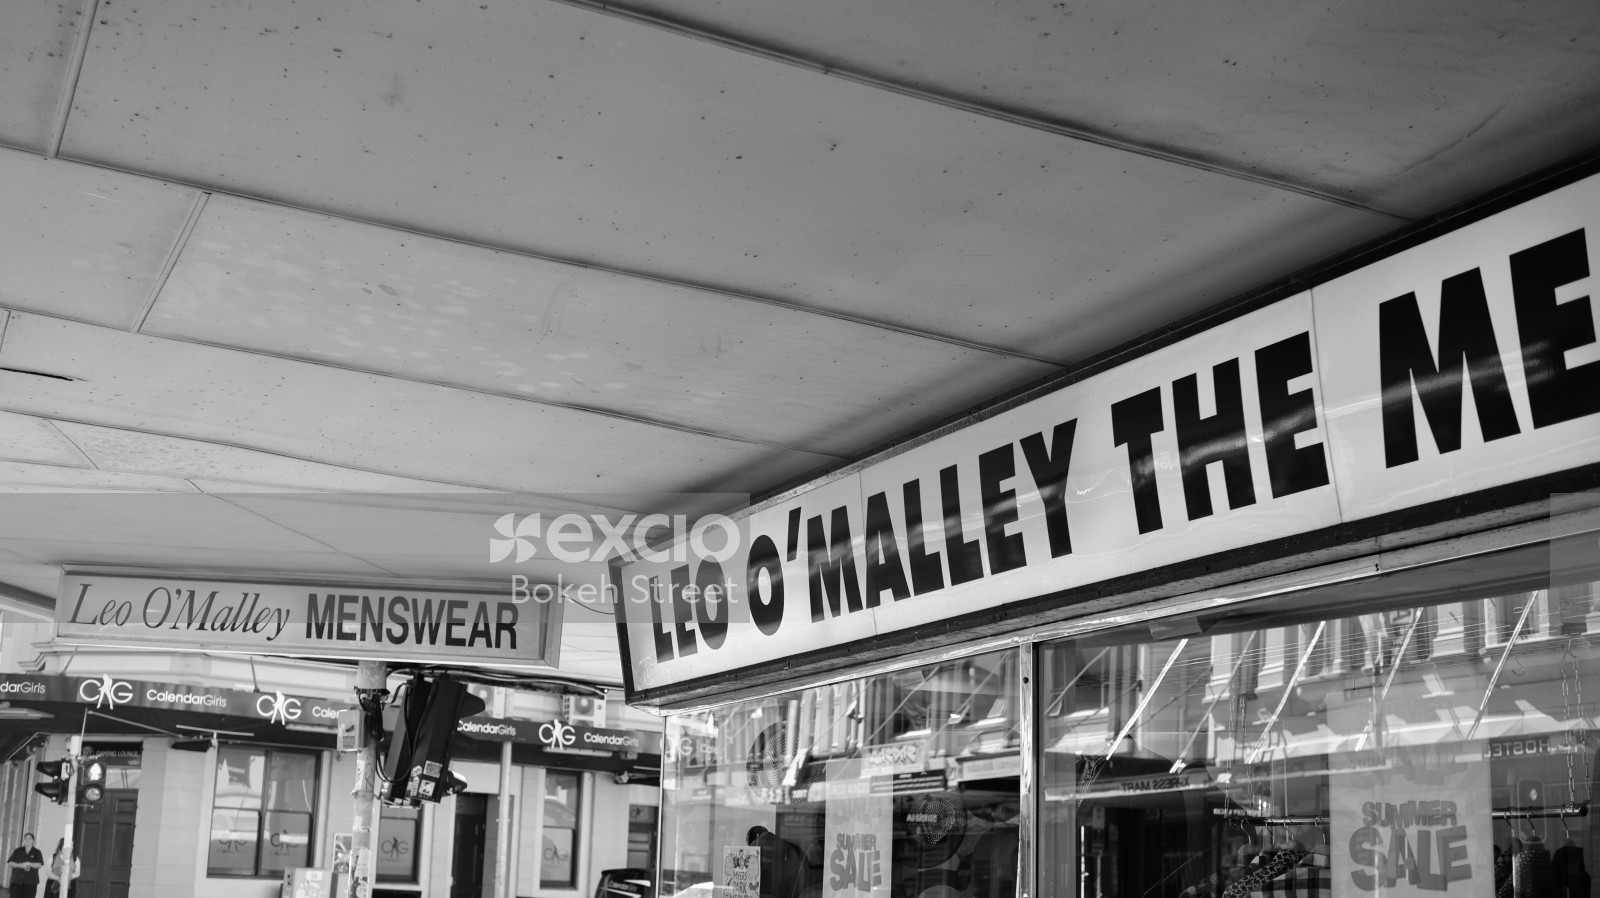 Leo O'Malley apparel shop at K' road monochrome